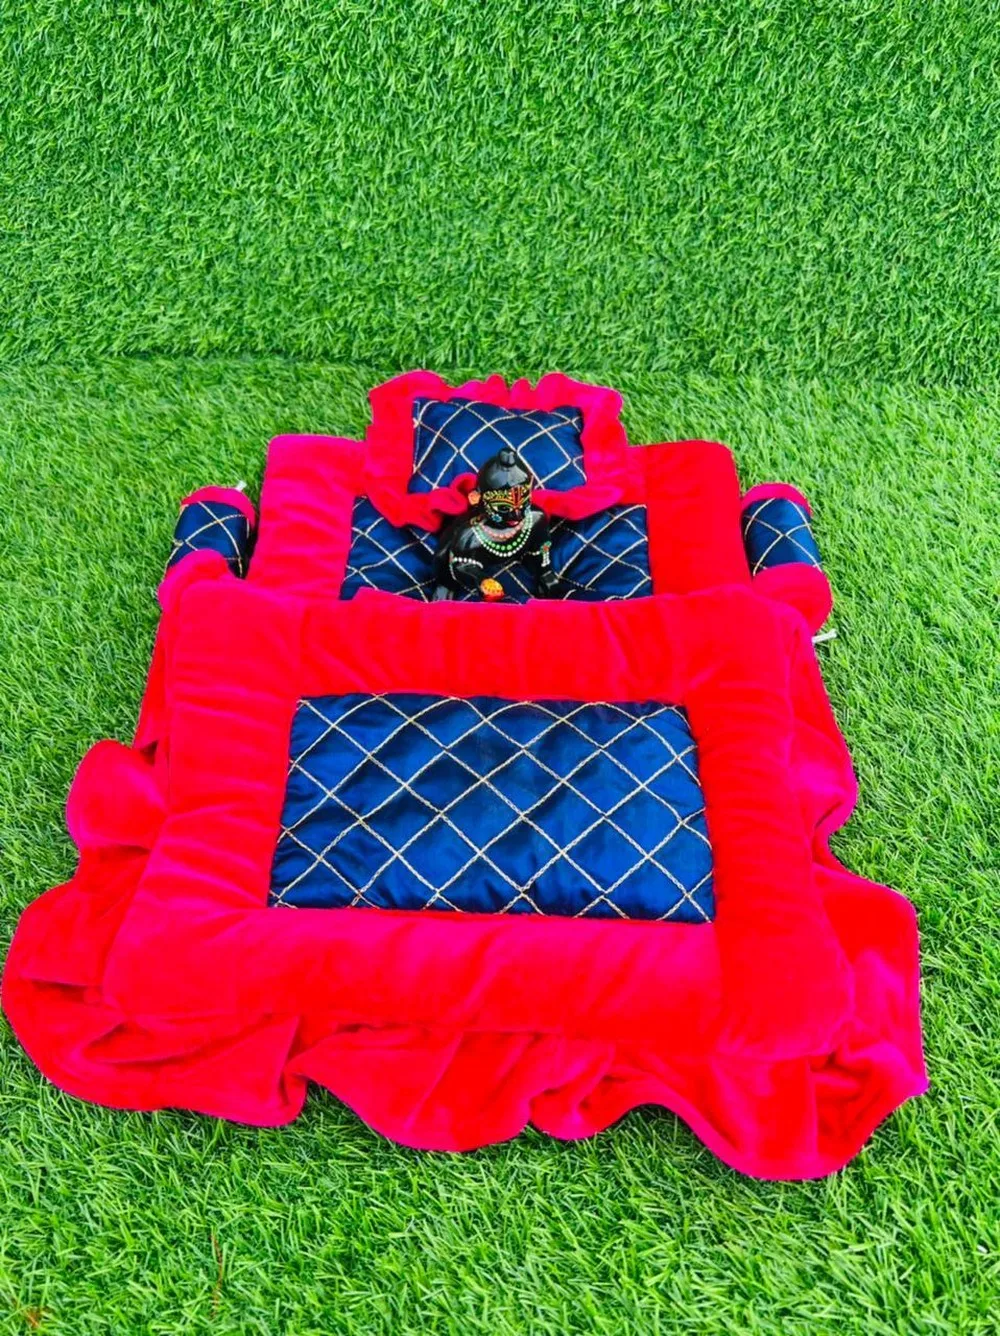 Laddu Gopal bedding set velvet, Gadda, 
Booster, Pillow, red, blue